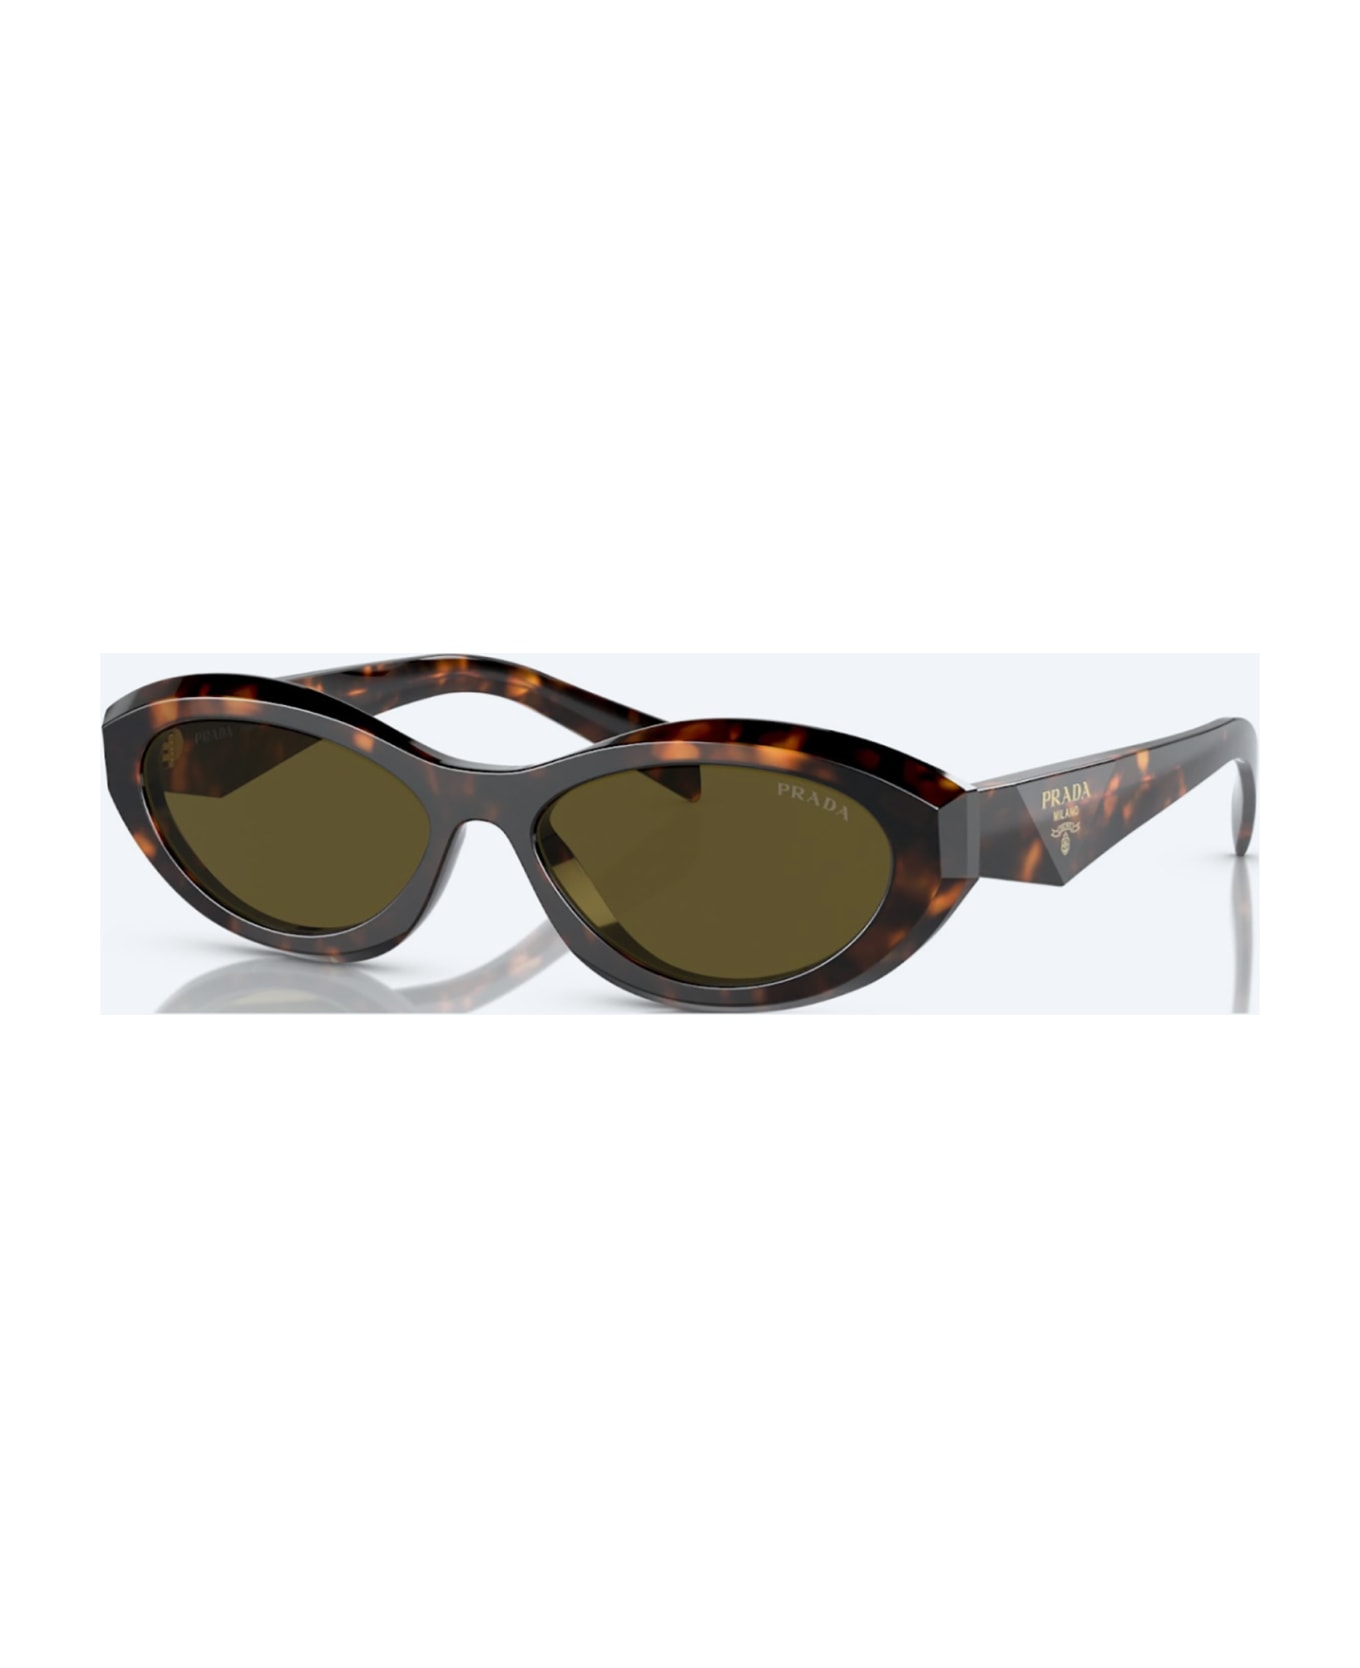 Prada Eyewear 26ZS SOLE Sunglasses - Z サングラス